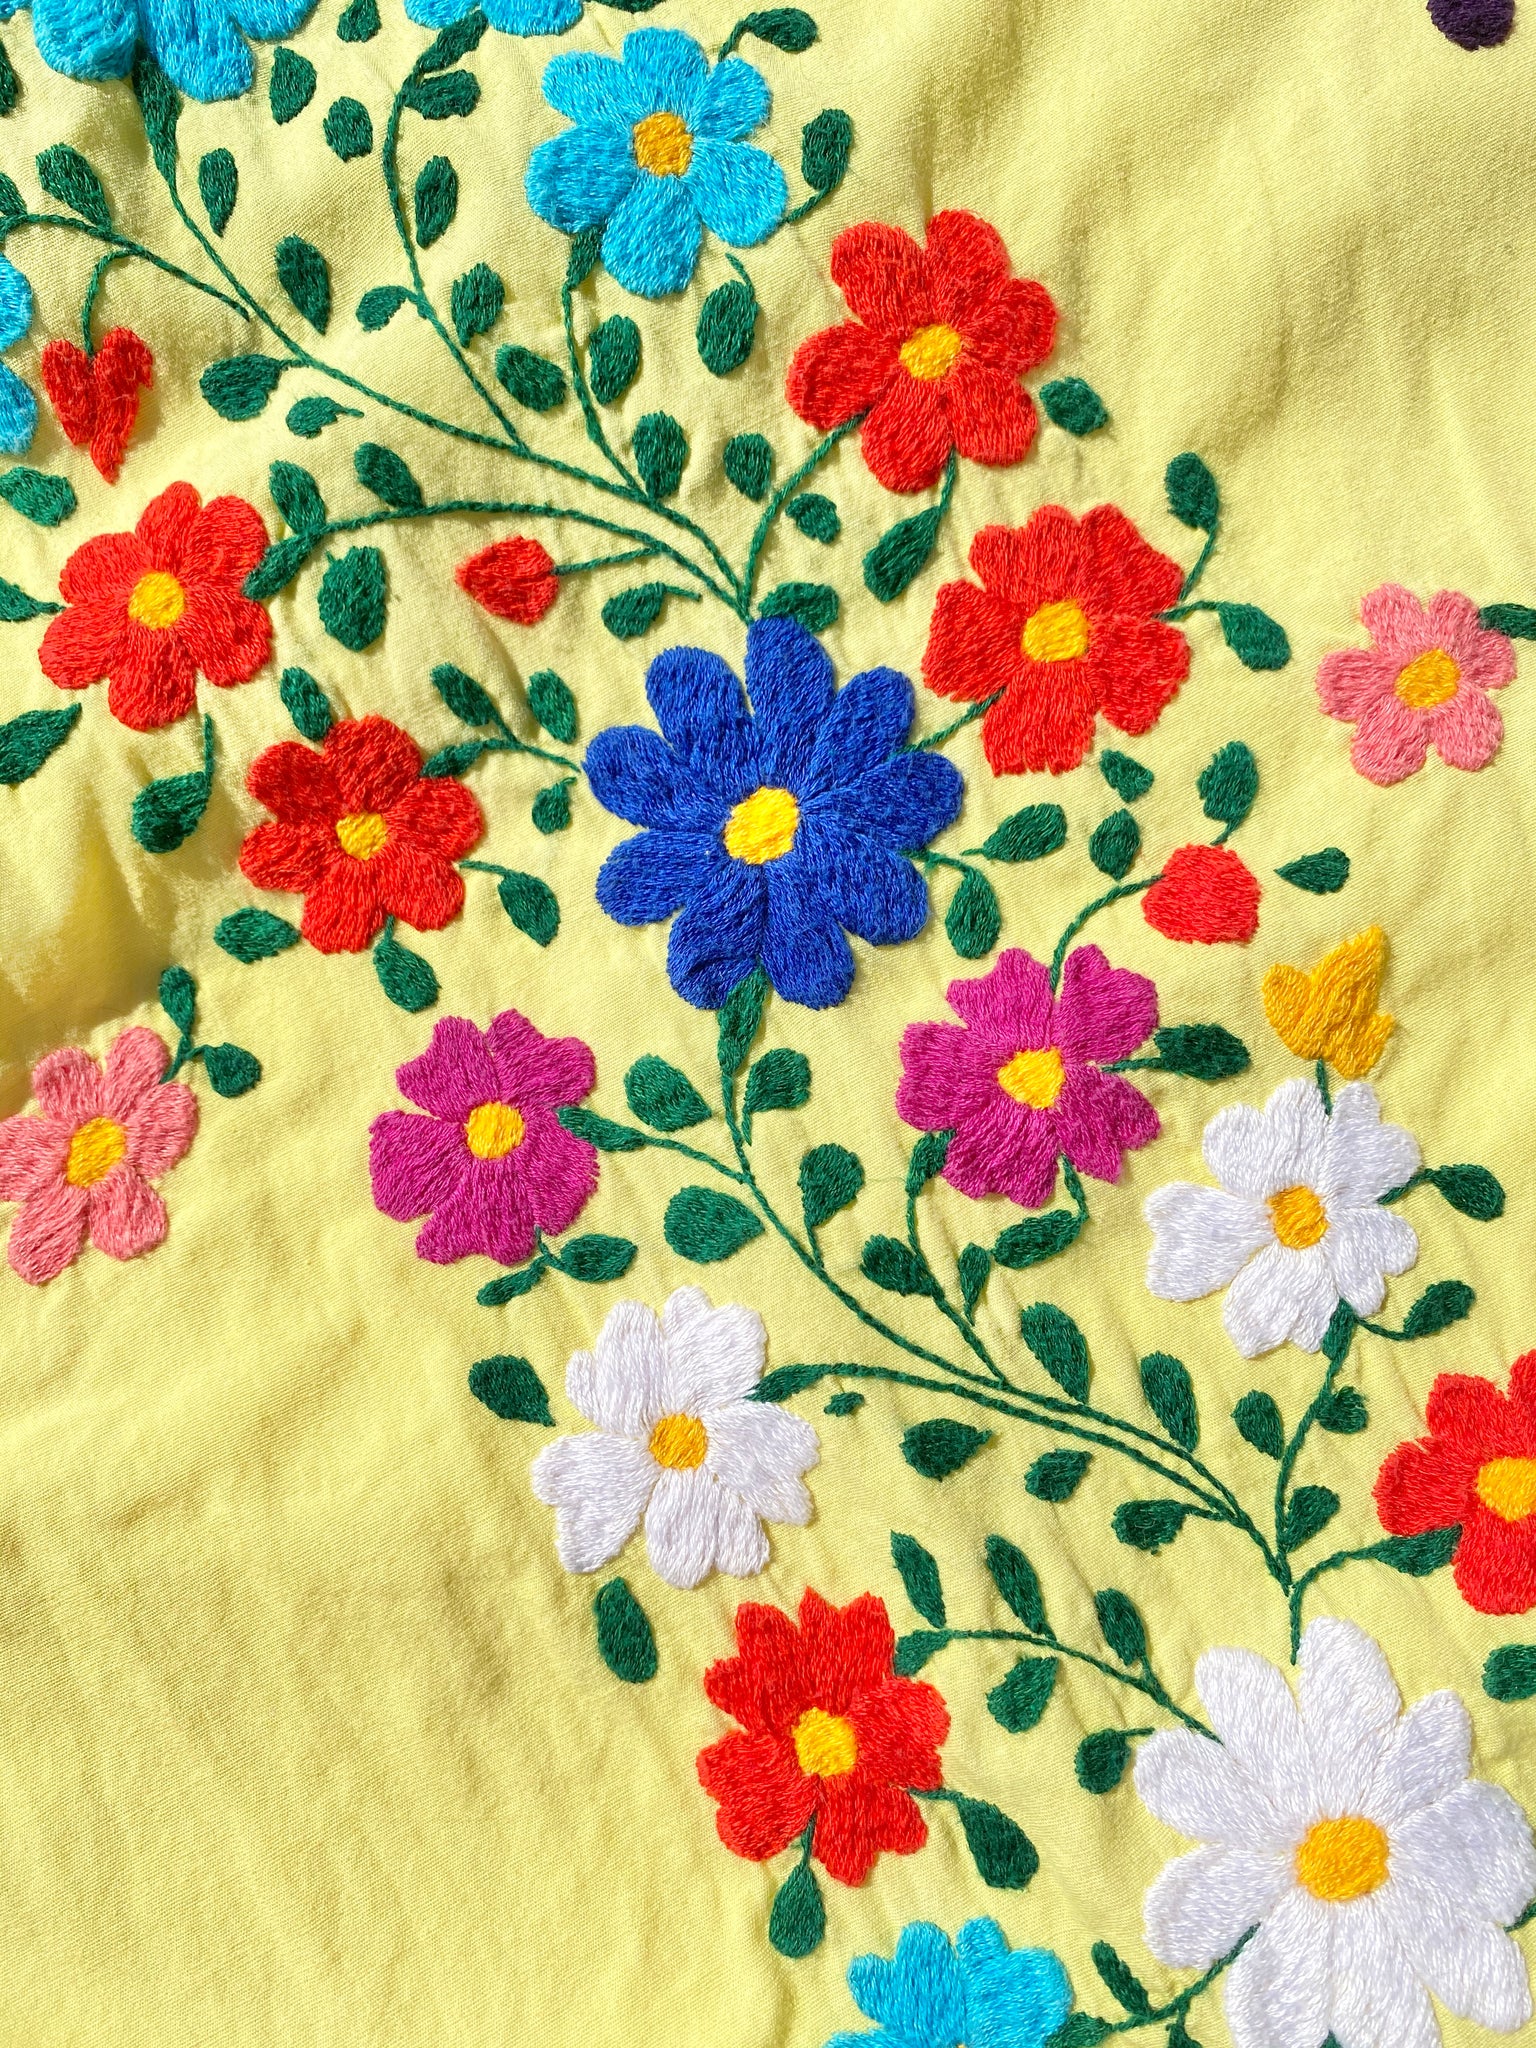 VINTAGE: Maxi Dress - Yellow Floral